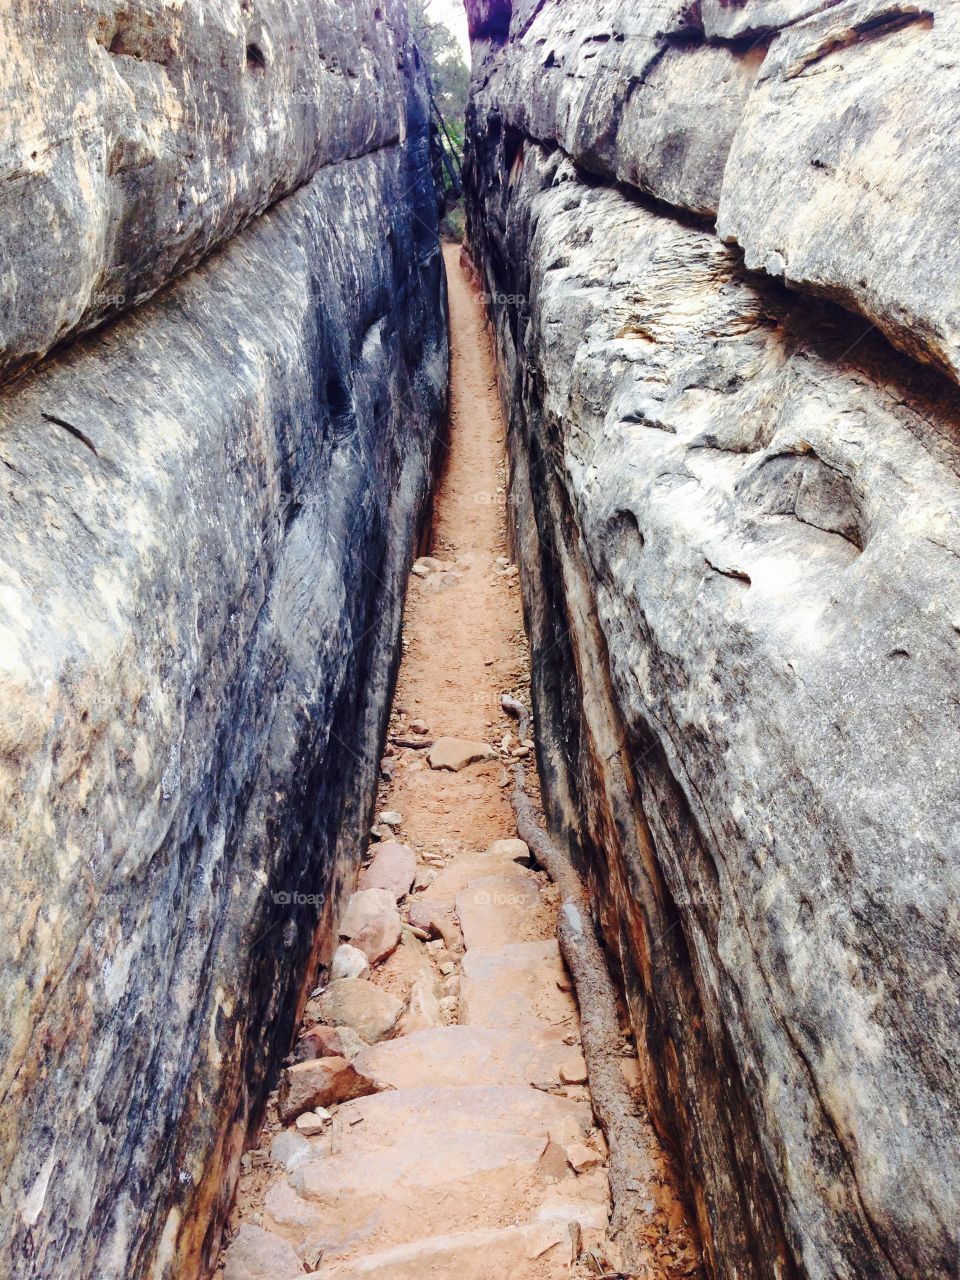 Rock corridor carved through Canyonlands National park 